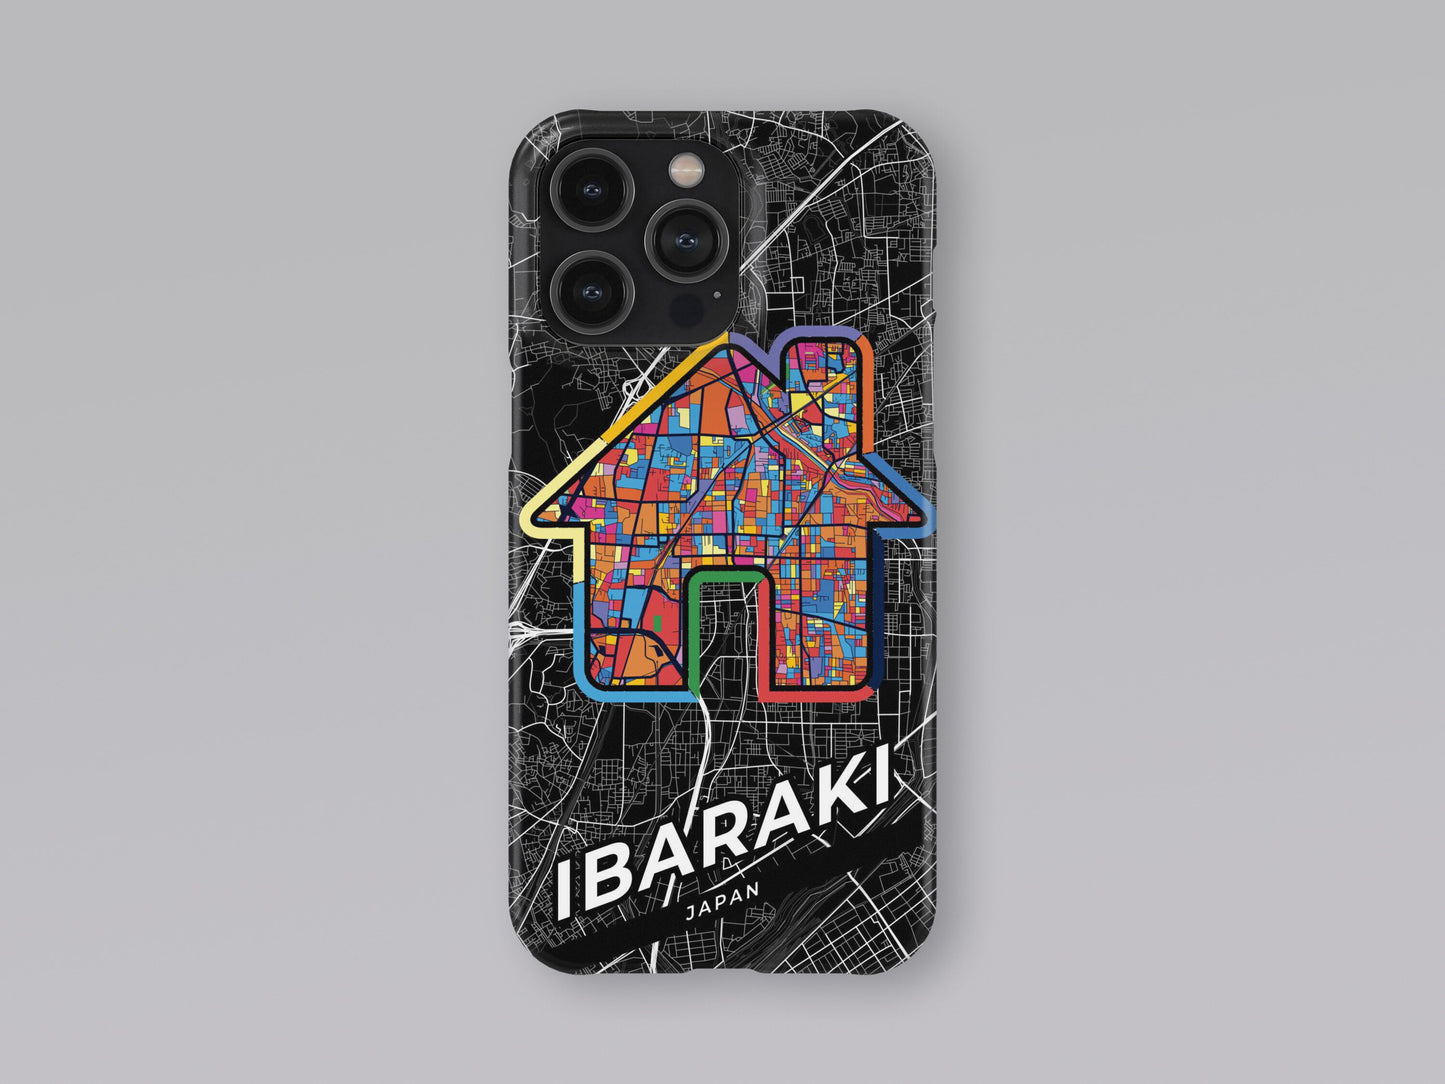 Ibaraki Japan slim phone case with colorful icon. Birthday, wedding or housewarming gift. Couple match cases. 3